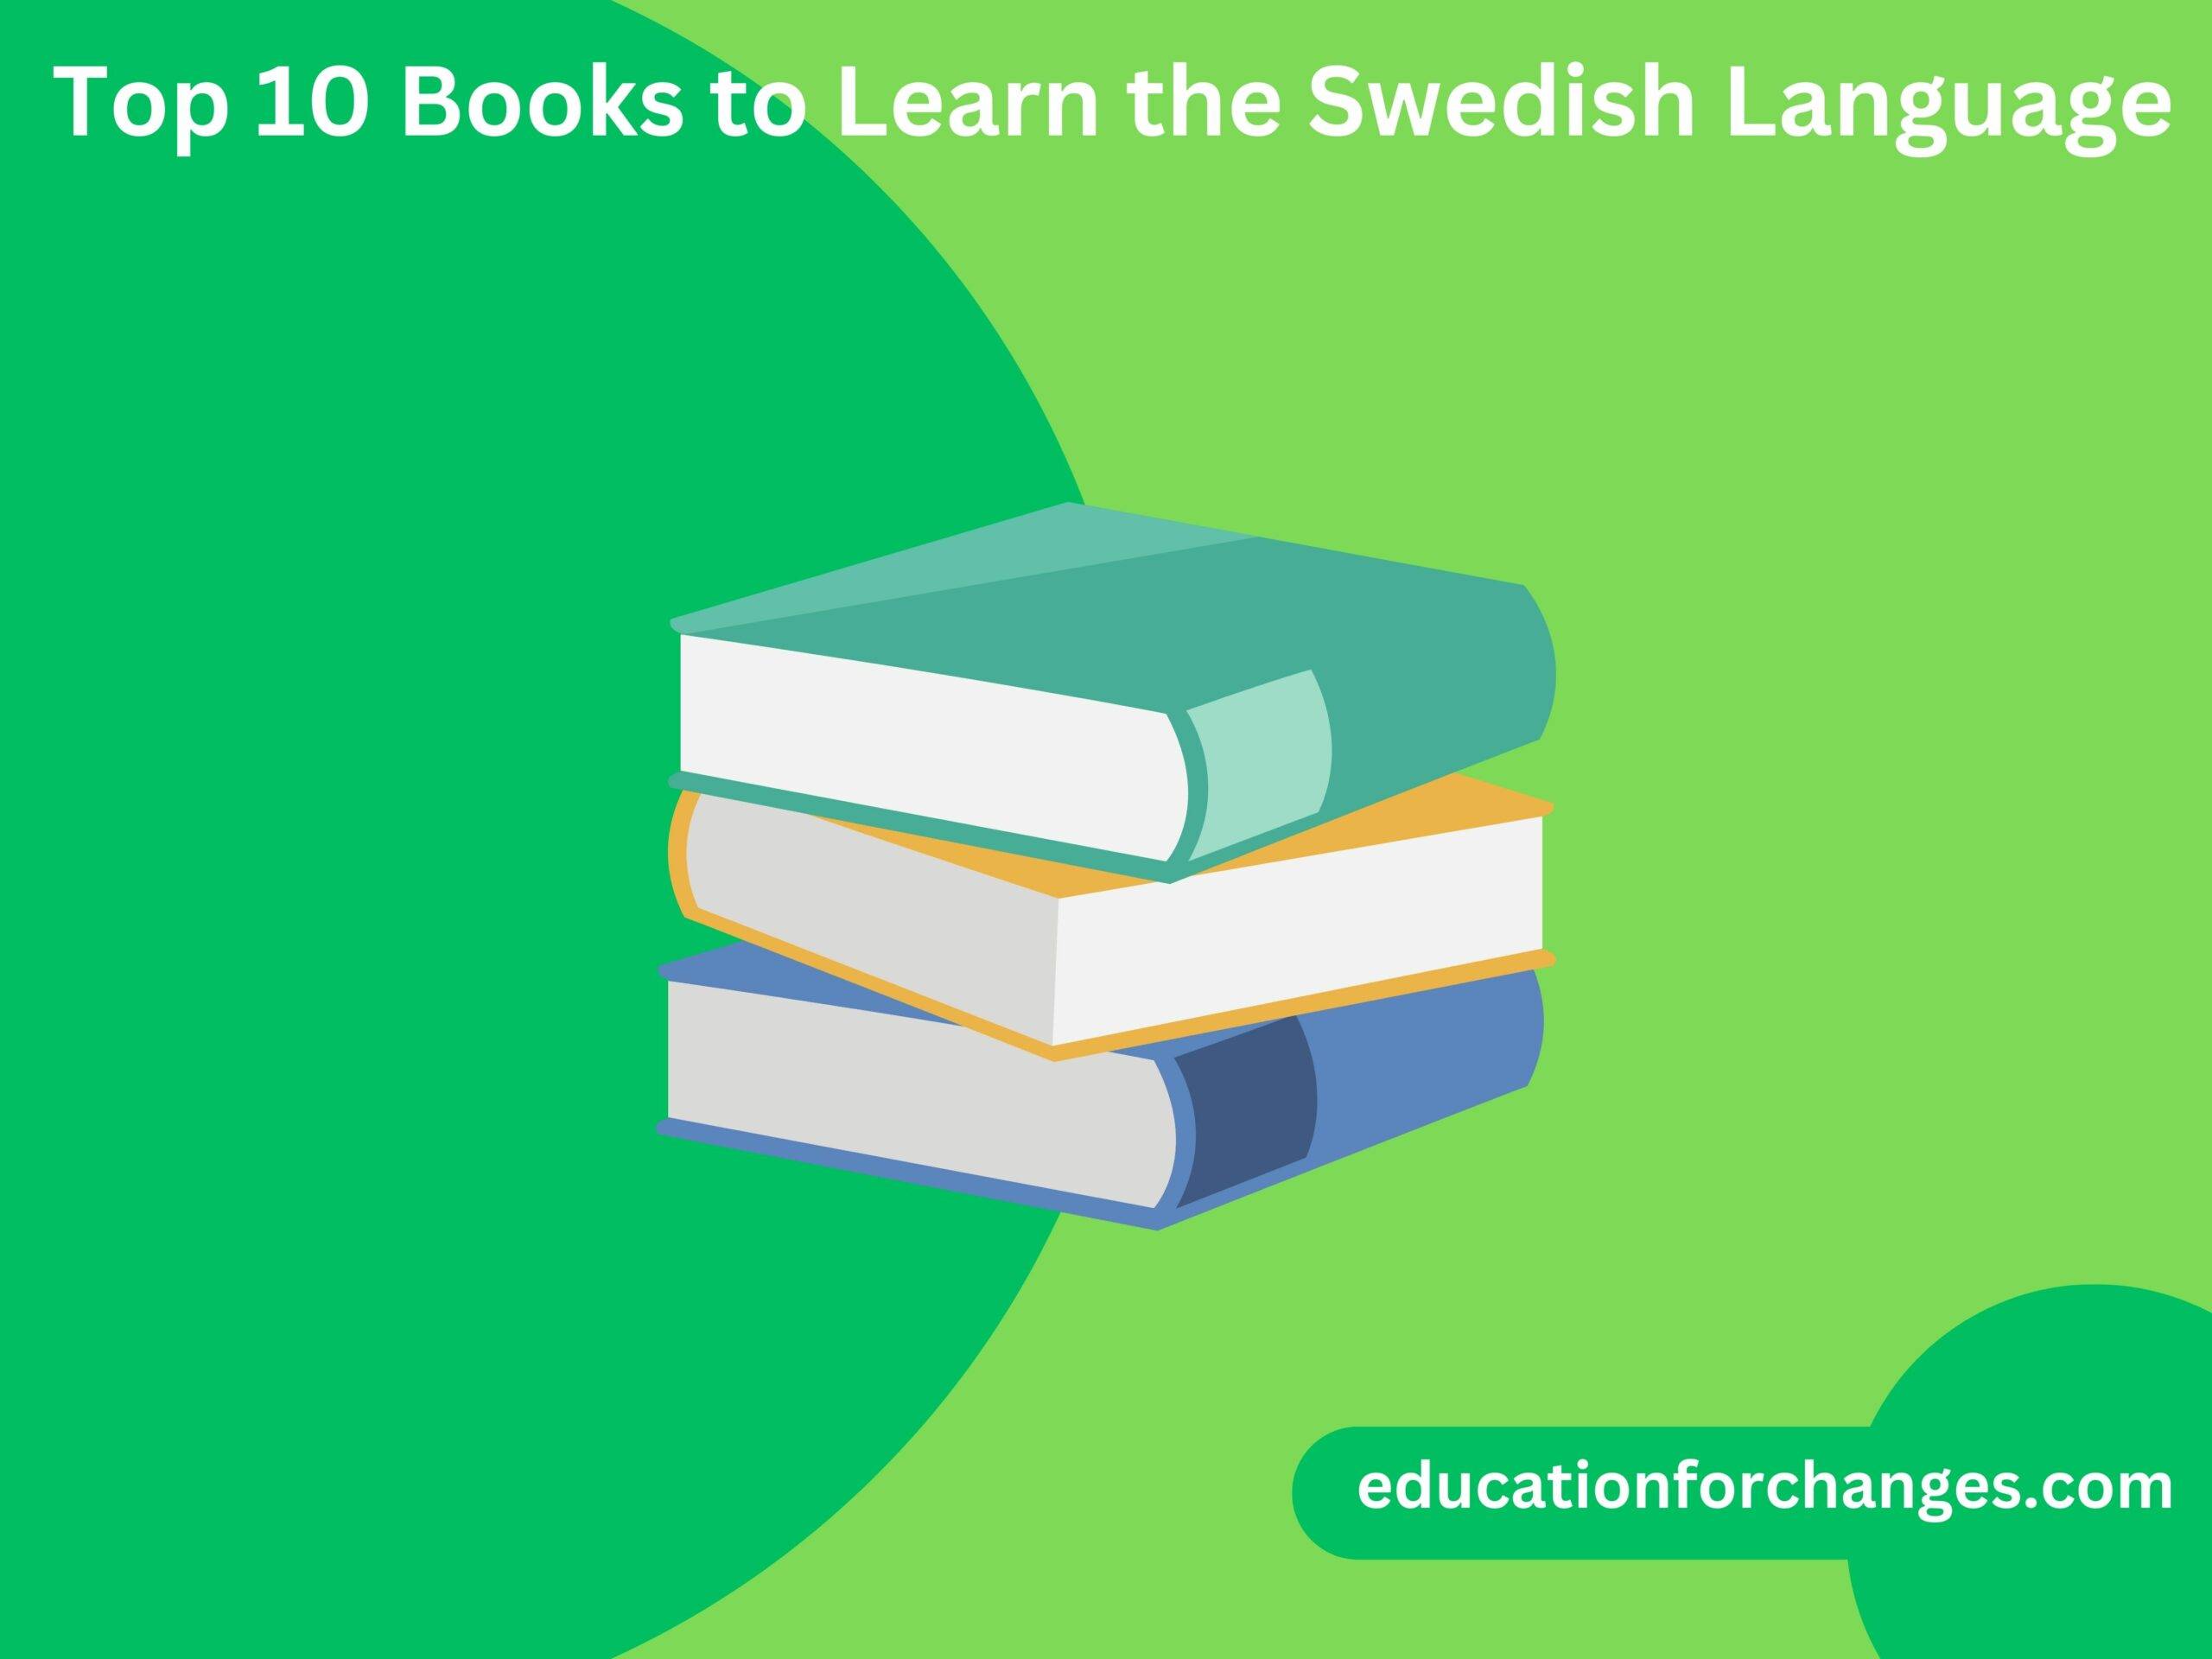 Top 10 Books to Learn the Swedish Language